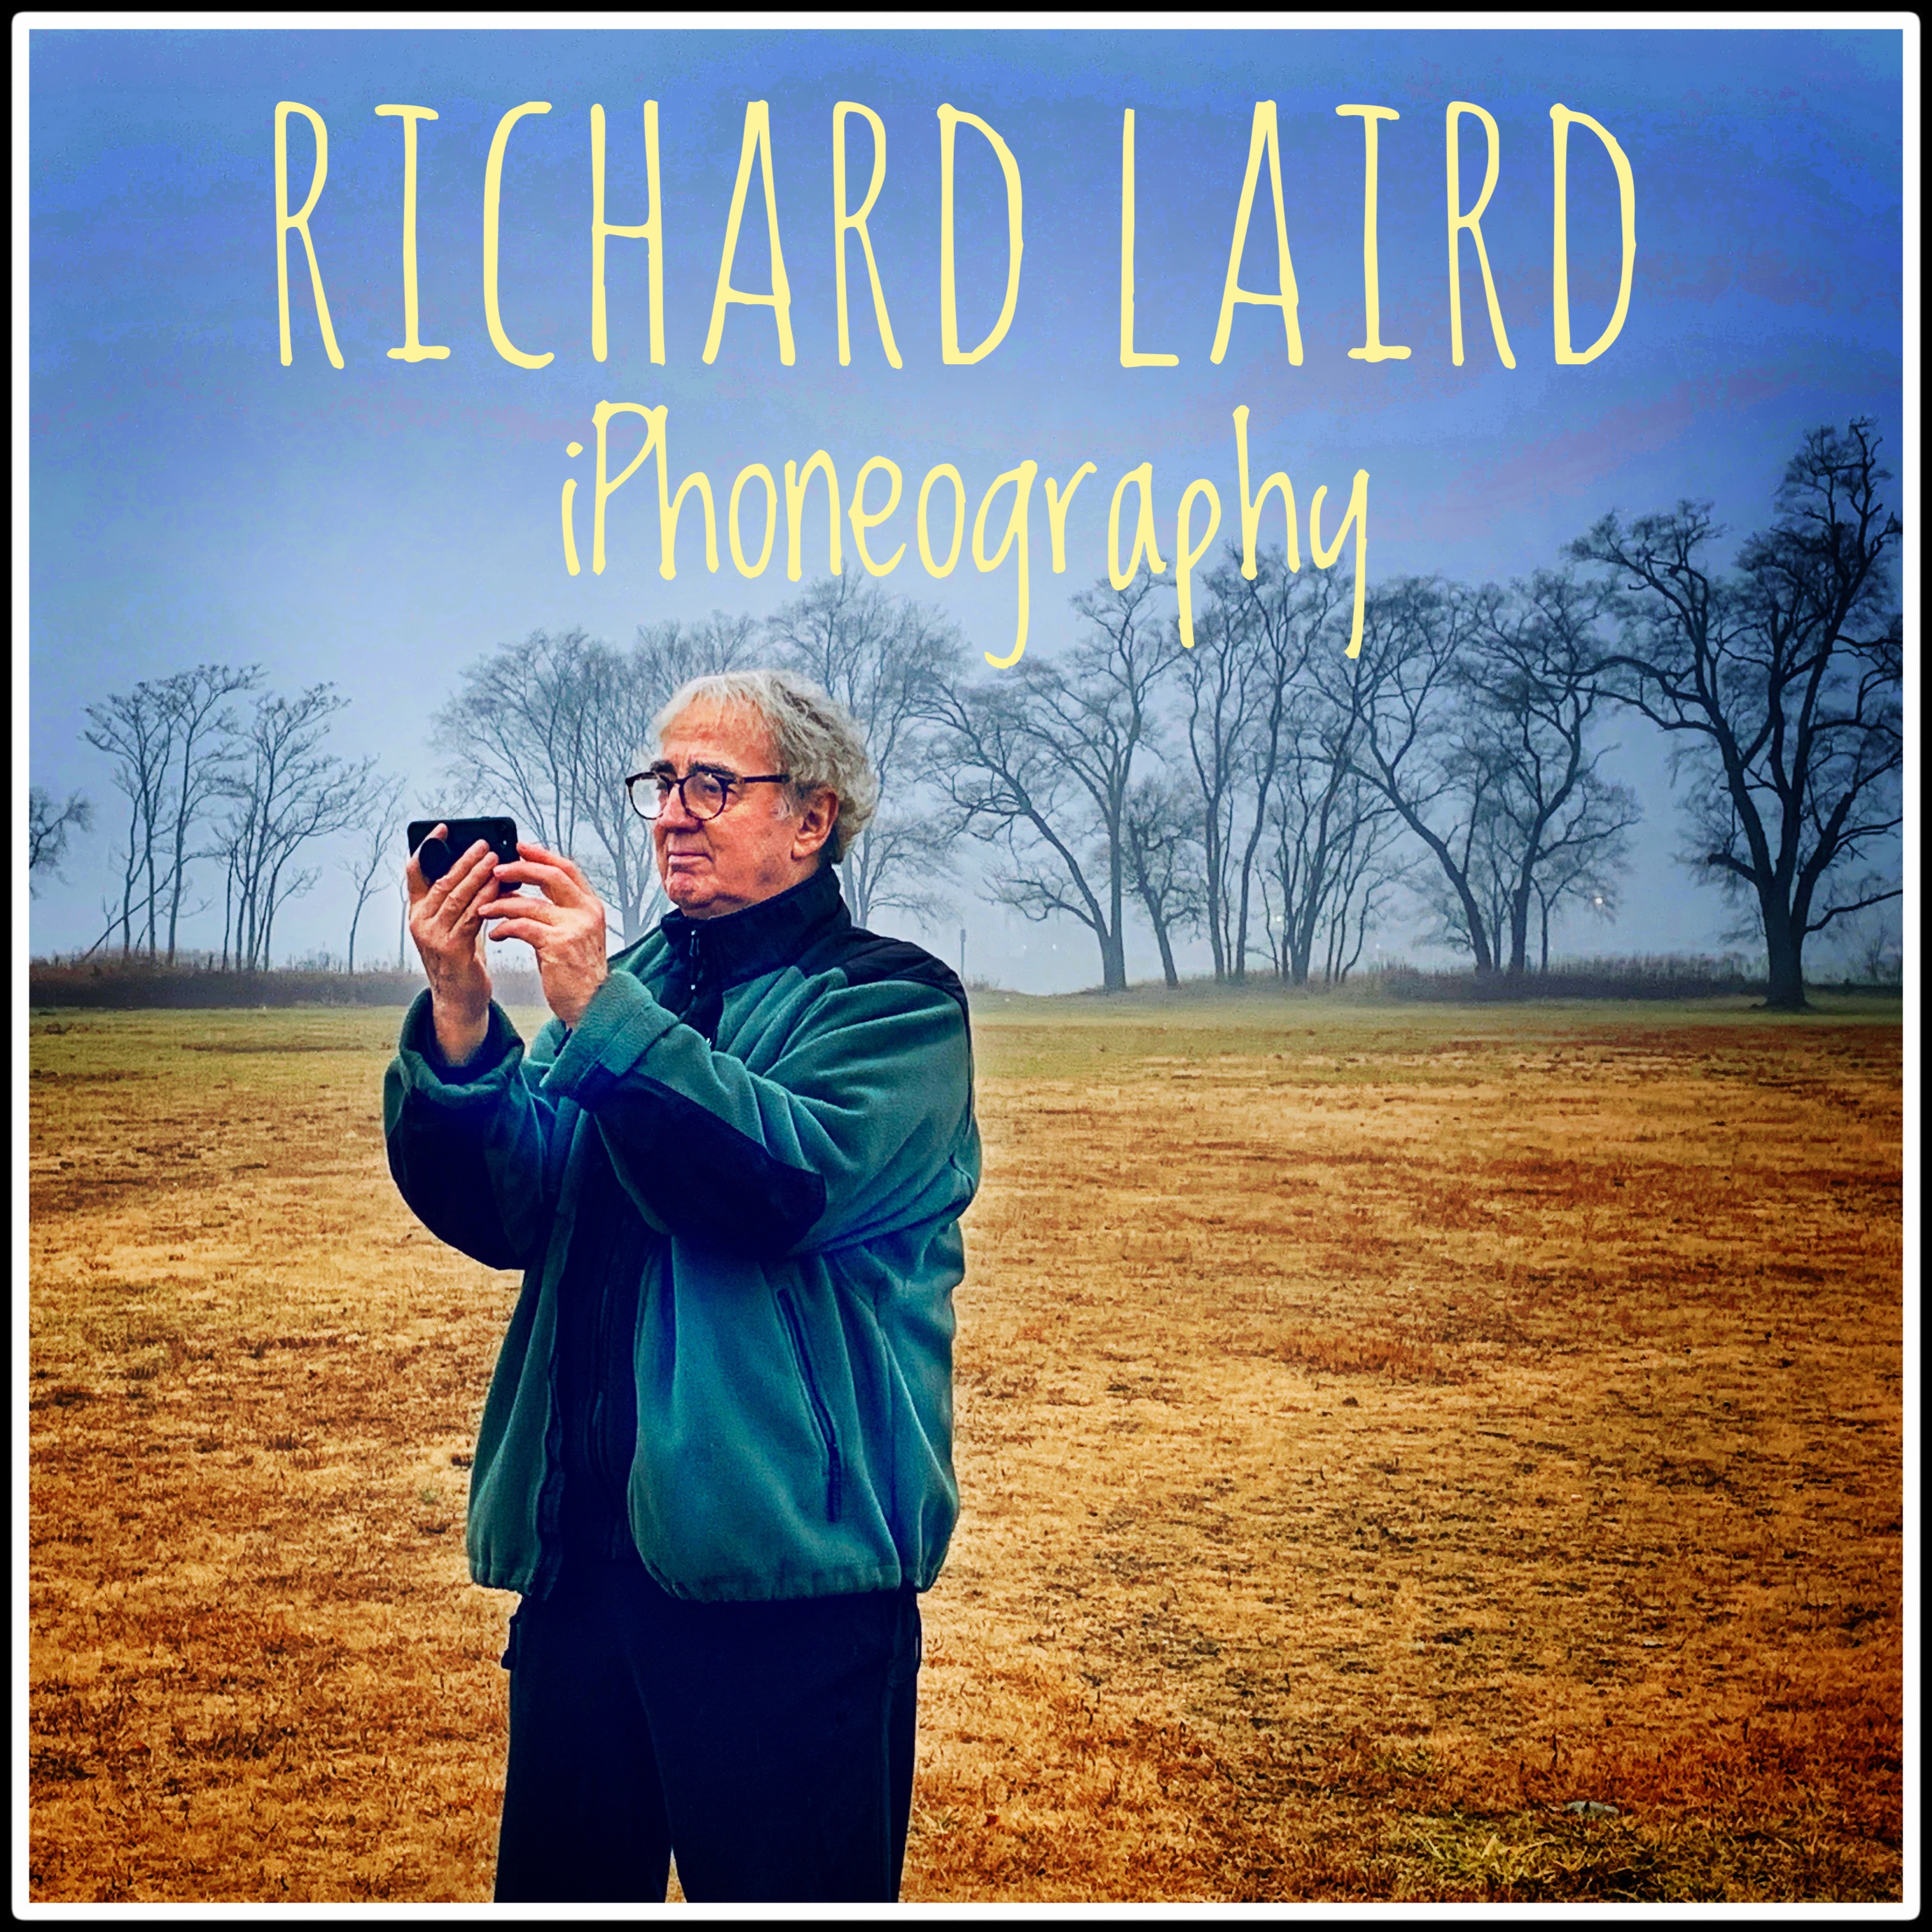 Richard Laird against a landscape taking a photo